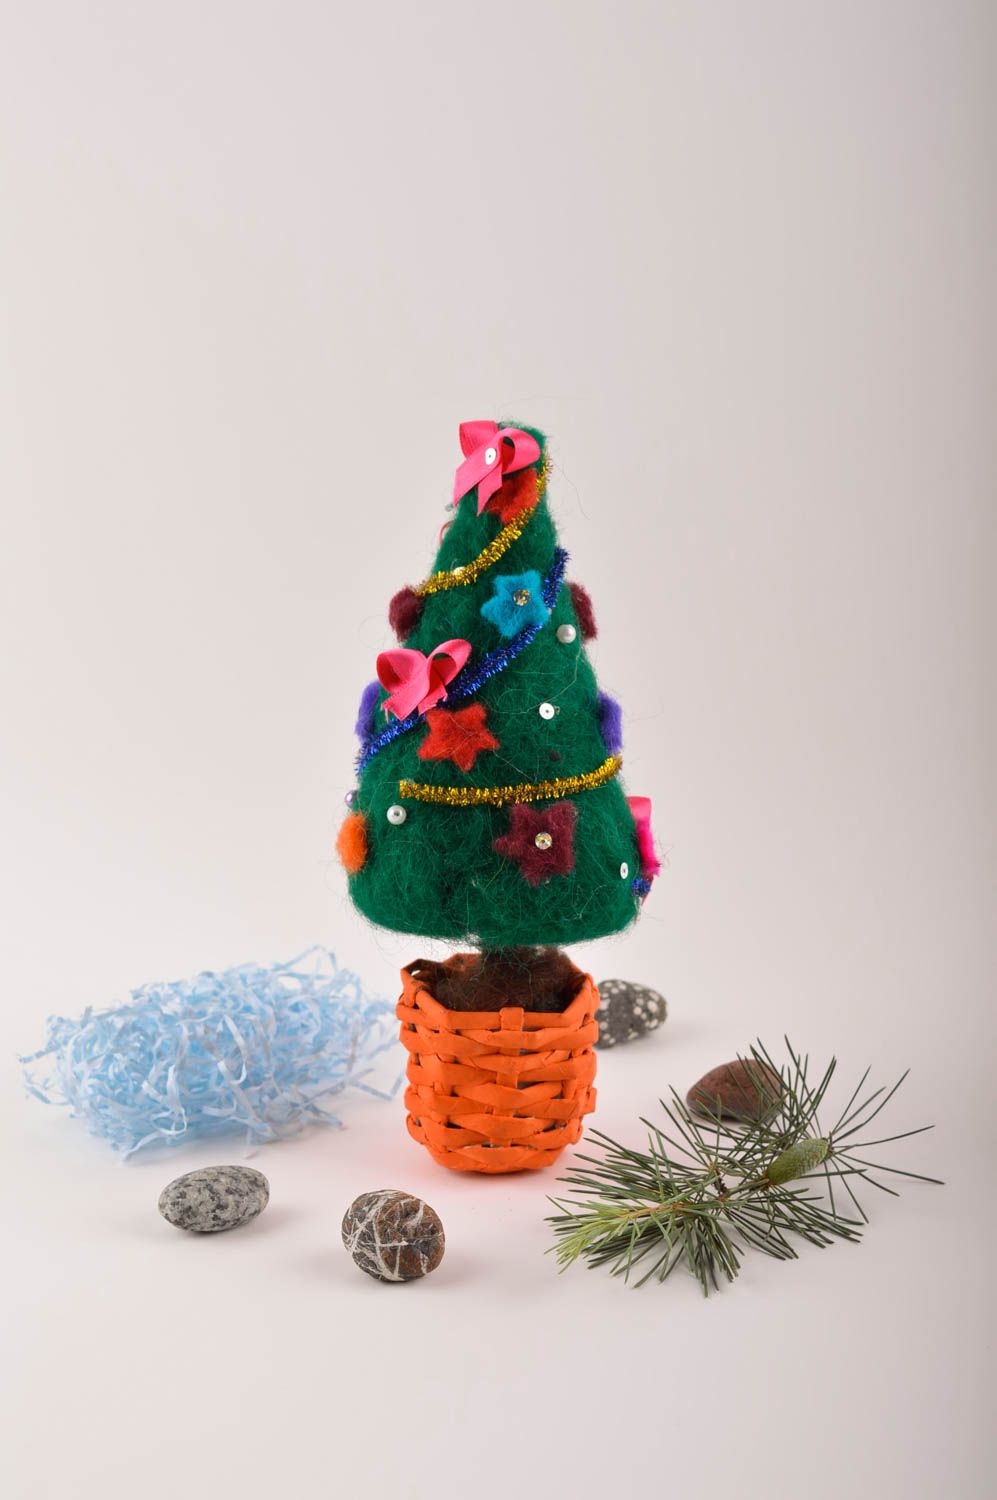 Homemade home decor fake Christmas tree for decorative use only Christmas gift photo 1